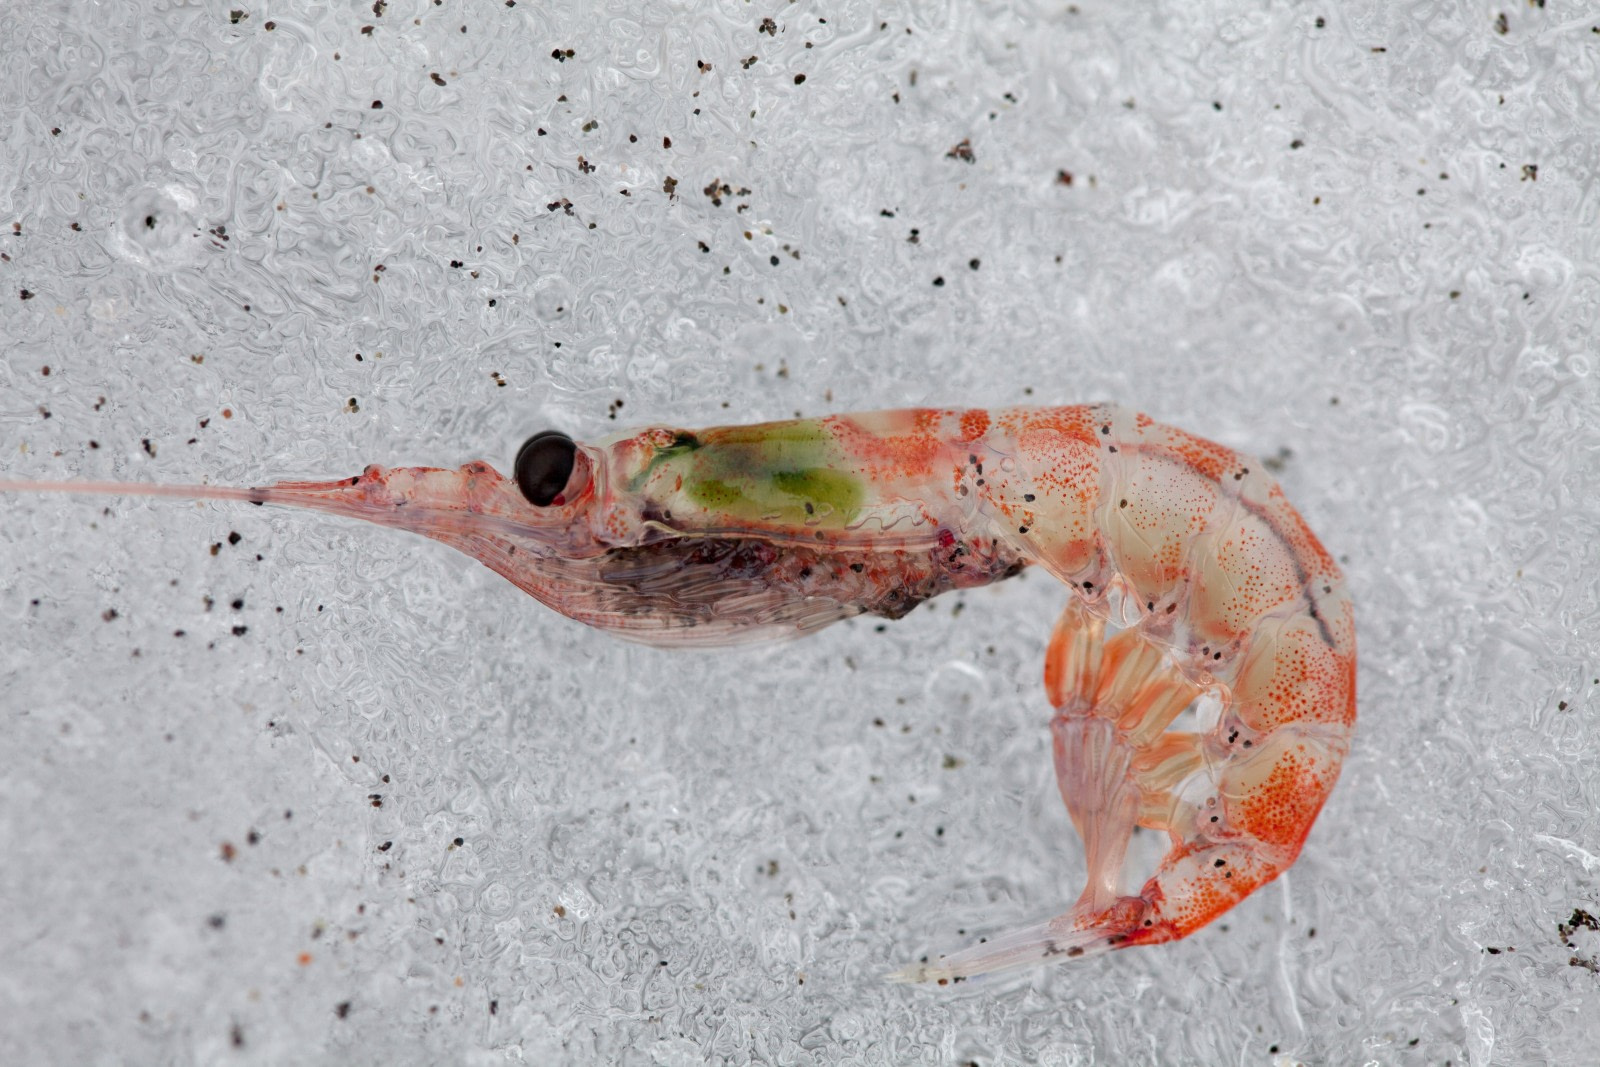 Antarctic krill: Antarctica's Superfood